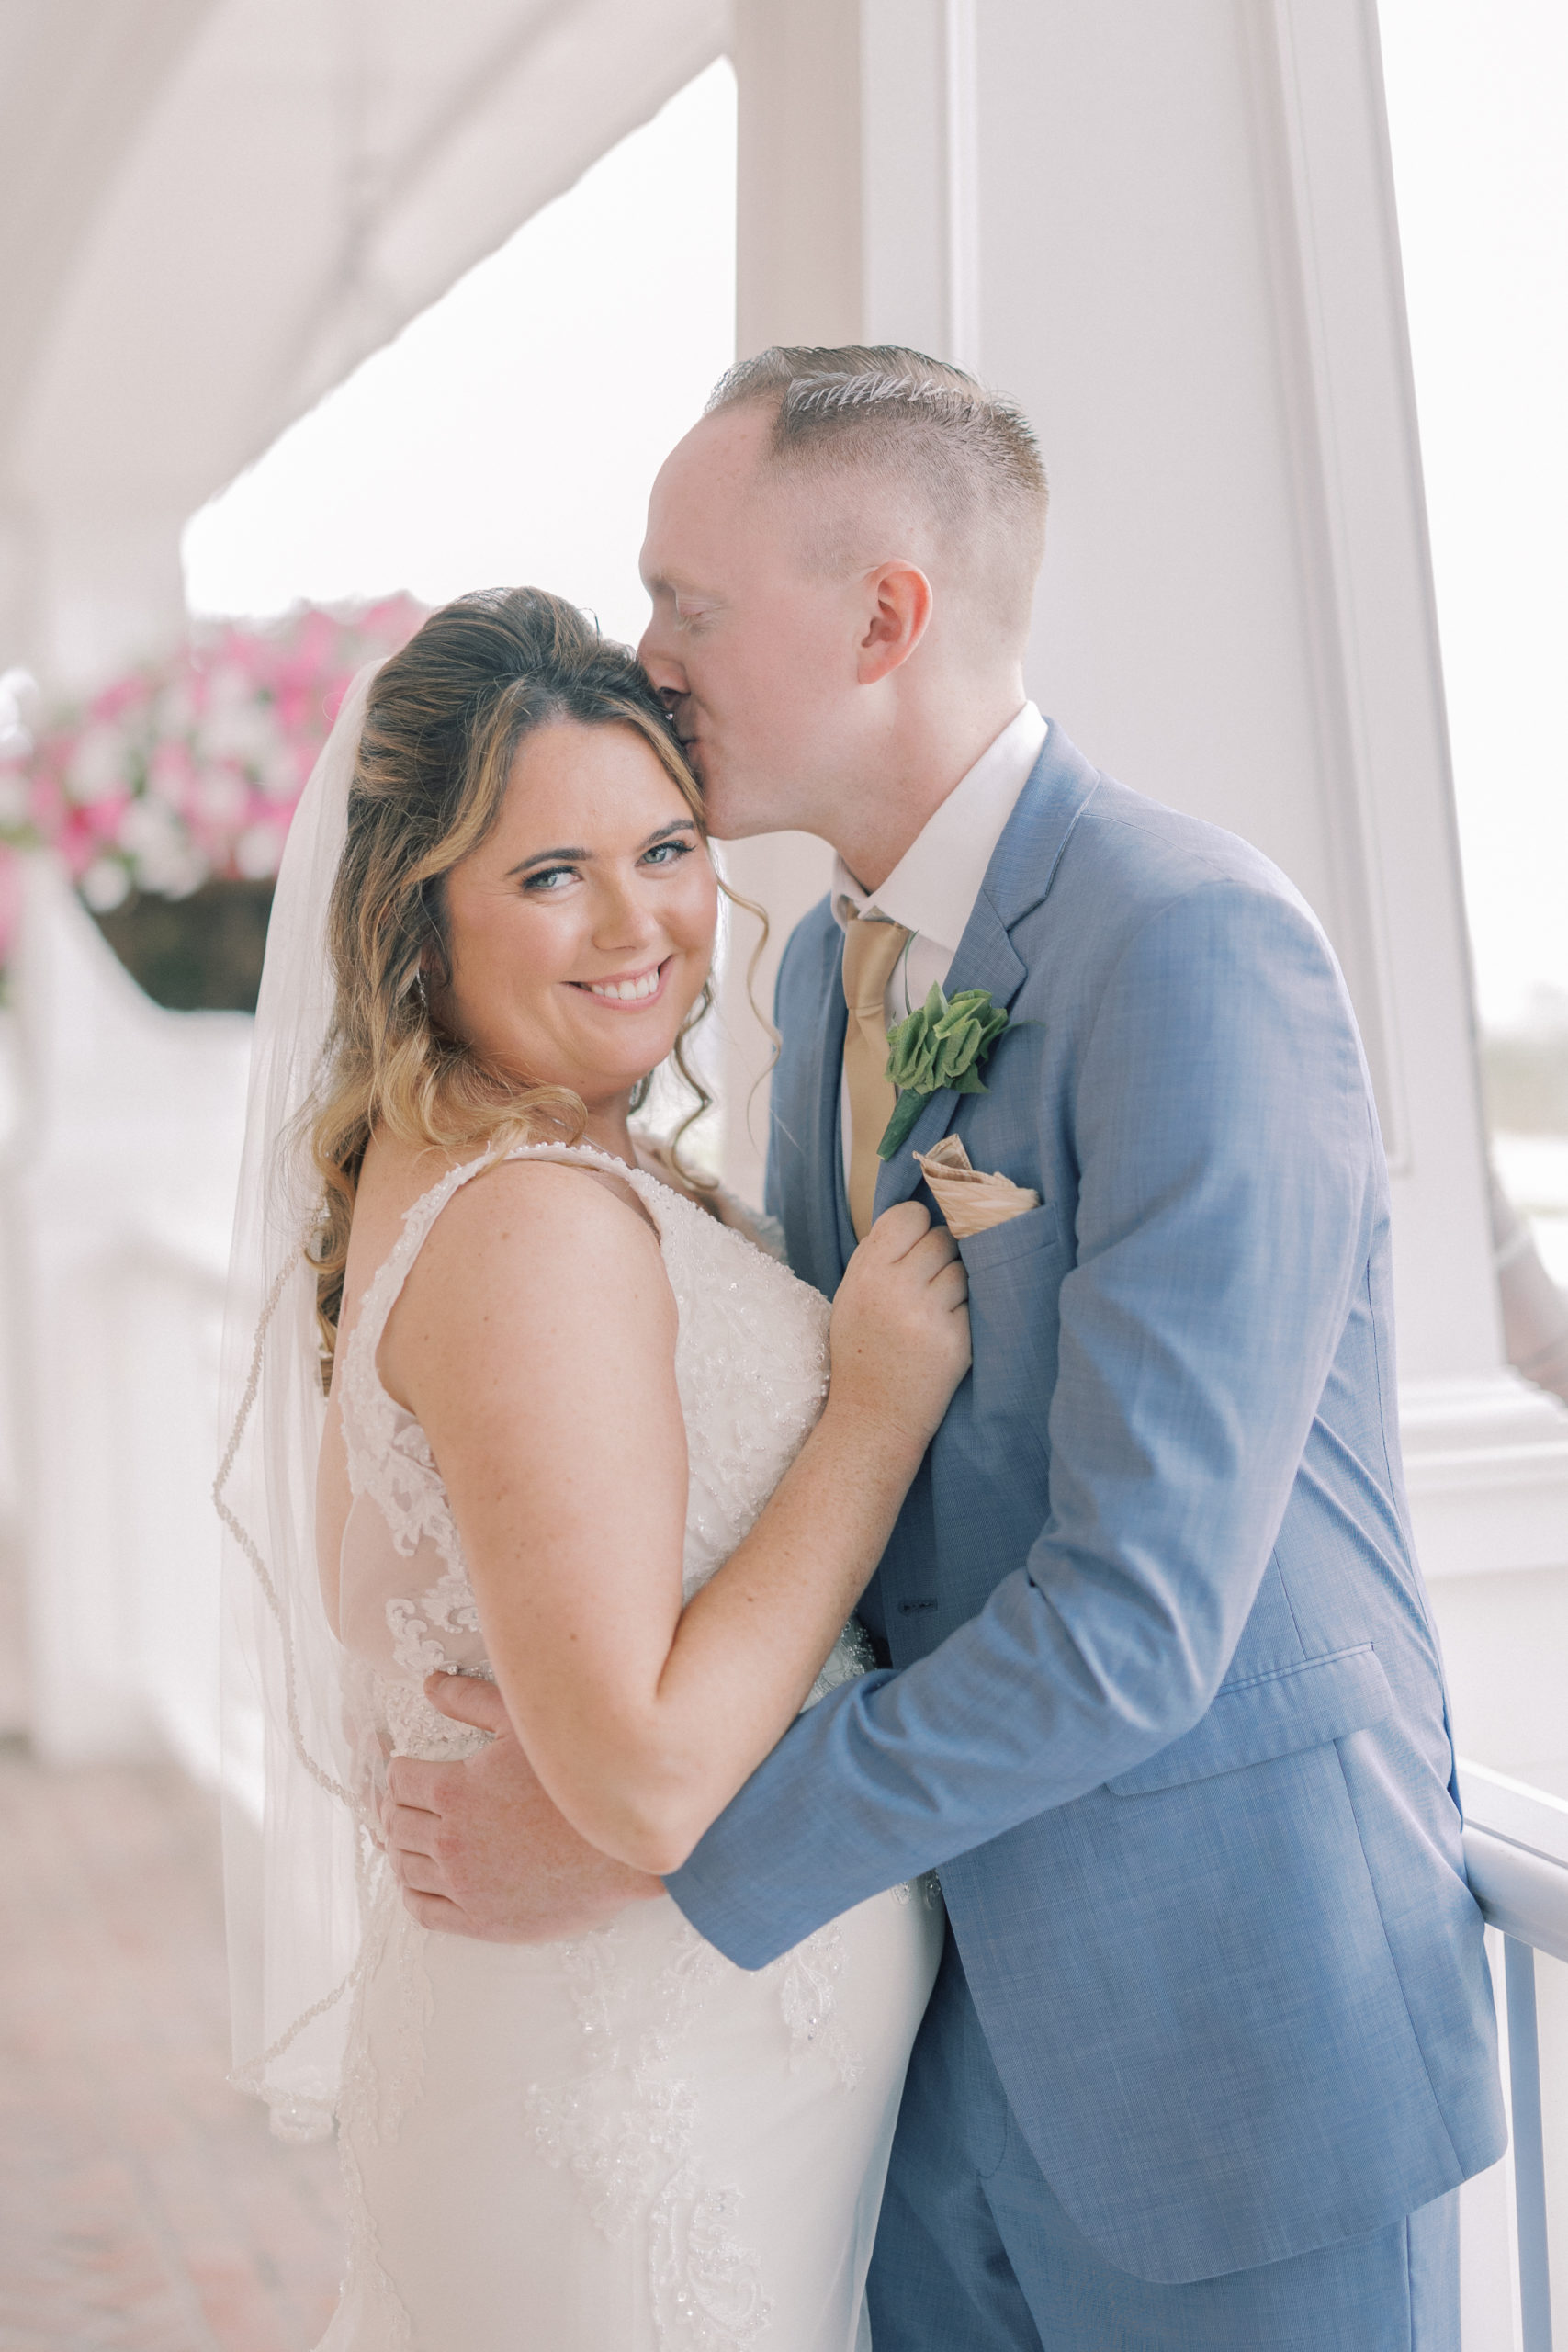 tips to survive a rainy wedding day | Pennsylvania wedding photographer